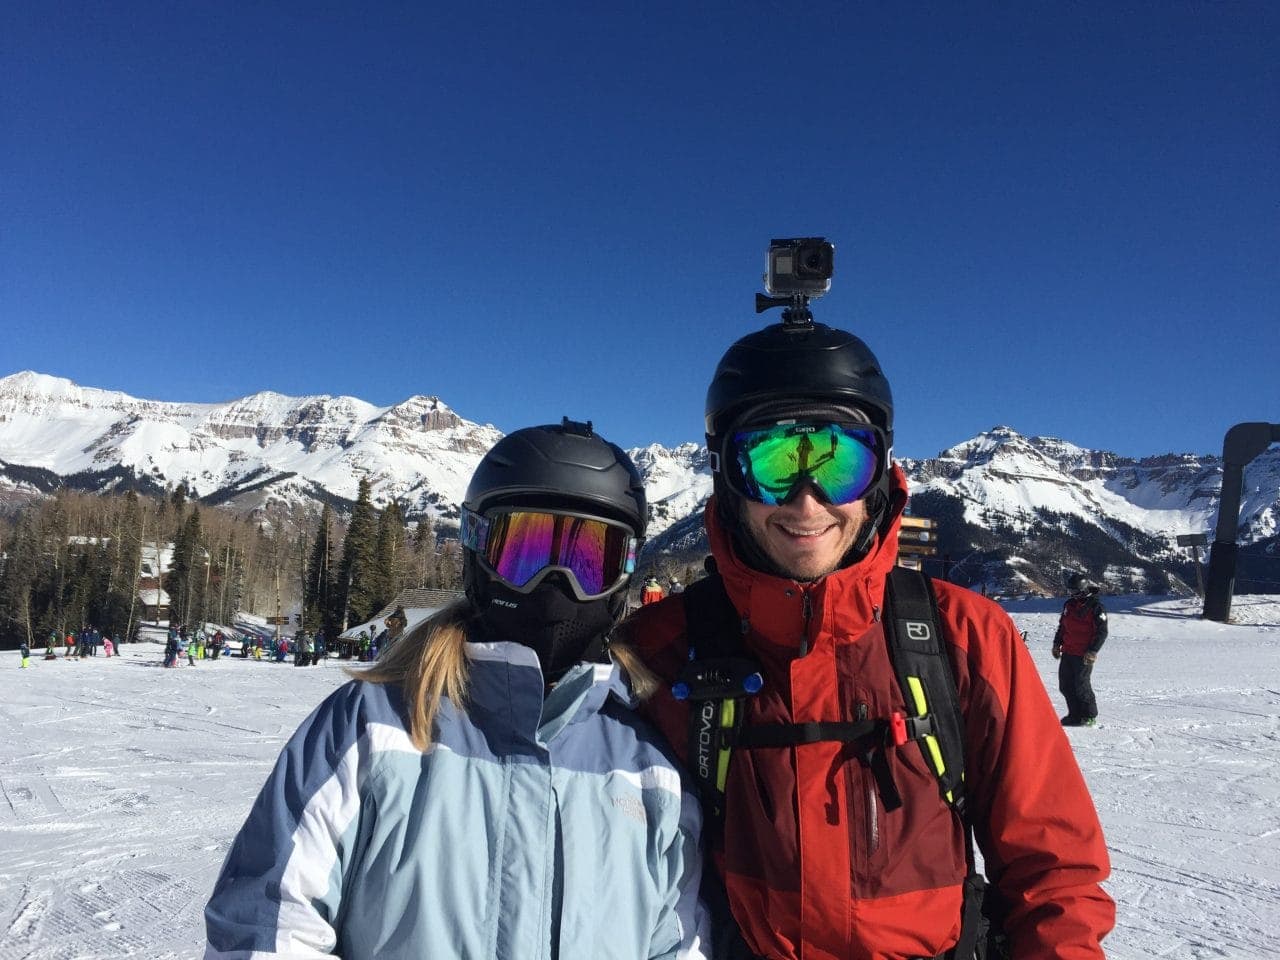 Keith and Lindsey at Telluride Ski Resort